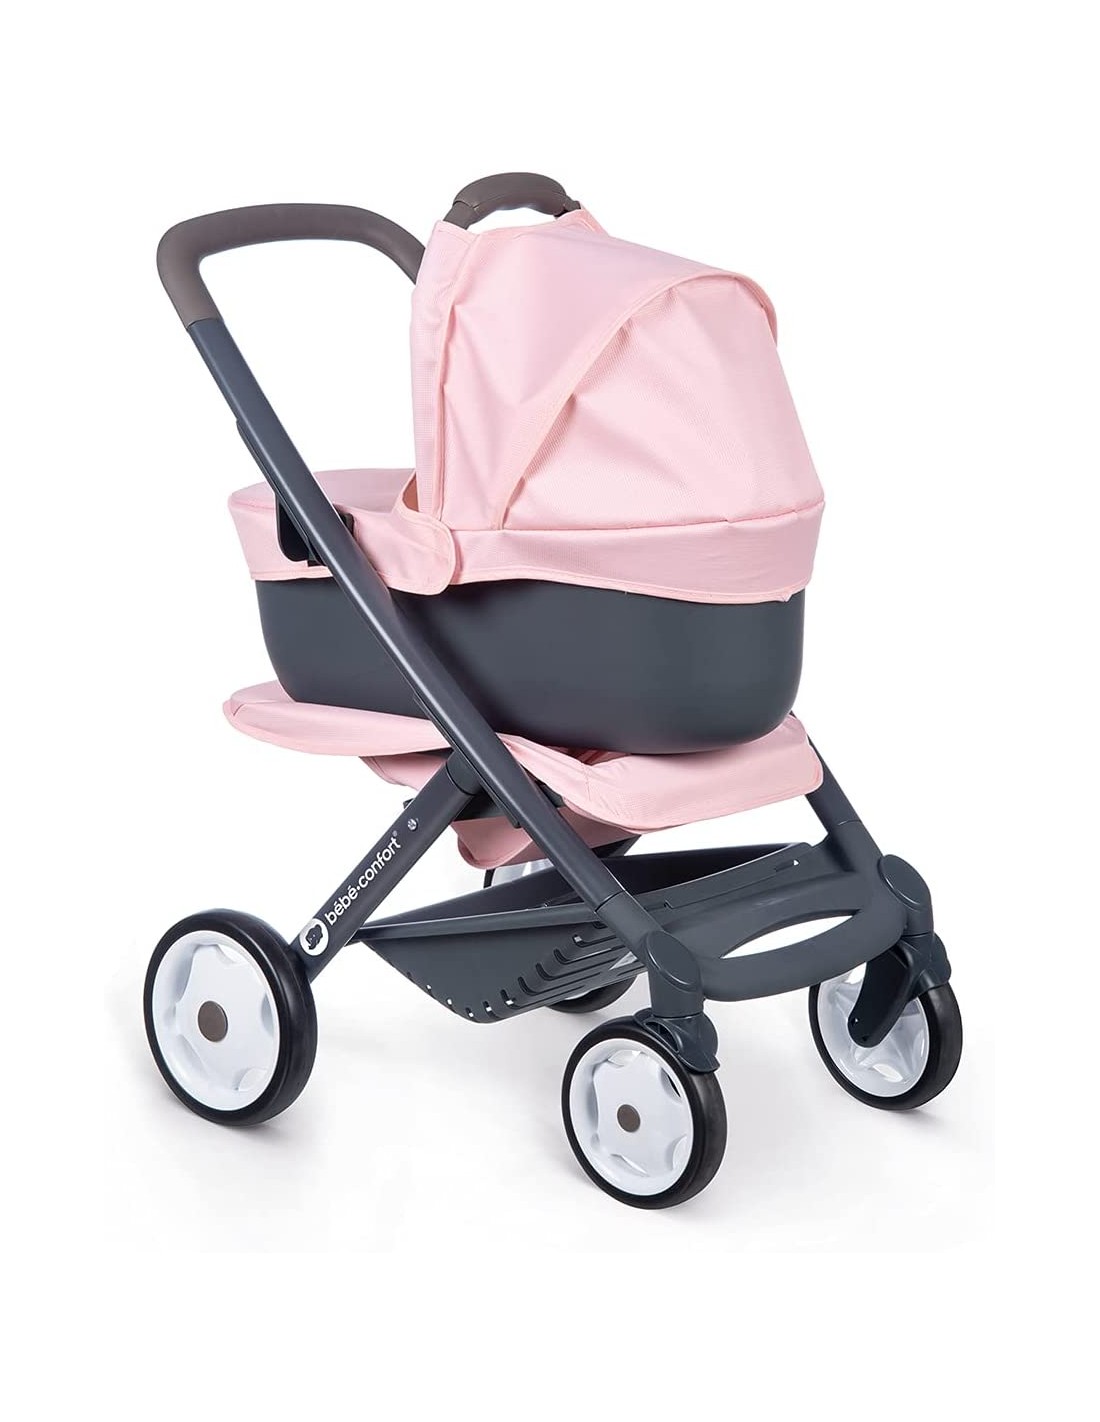 Bébé Confort-pink pram stroller 3 in 1 Simba Toys | Futurartshop